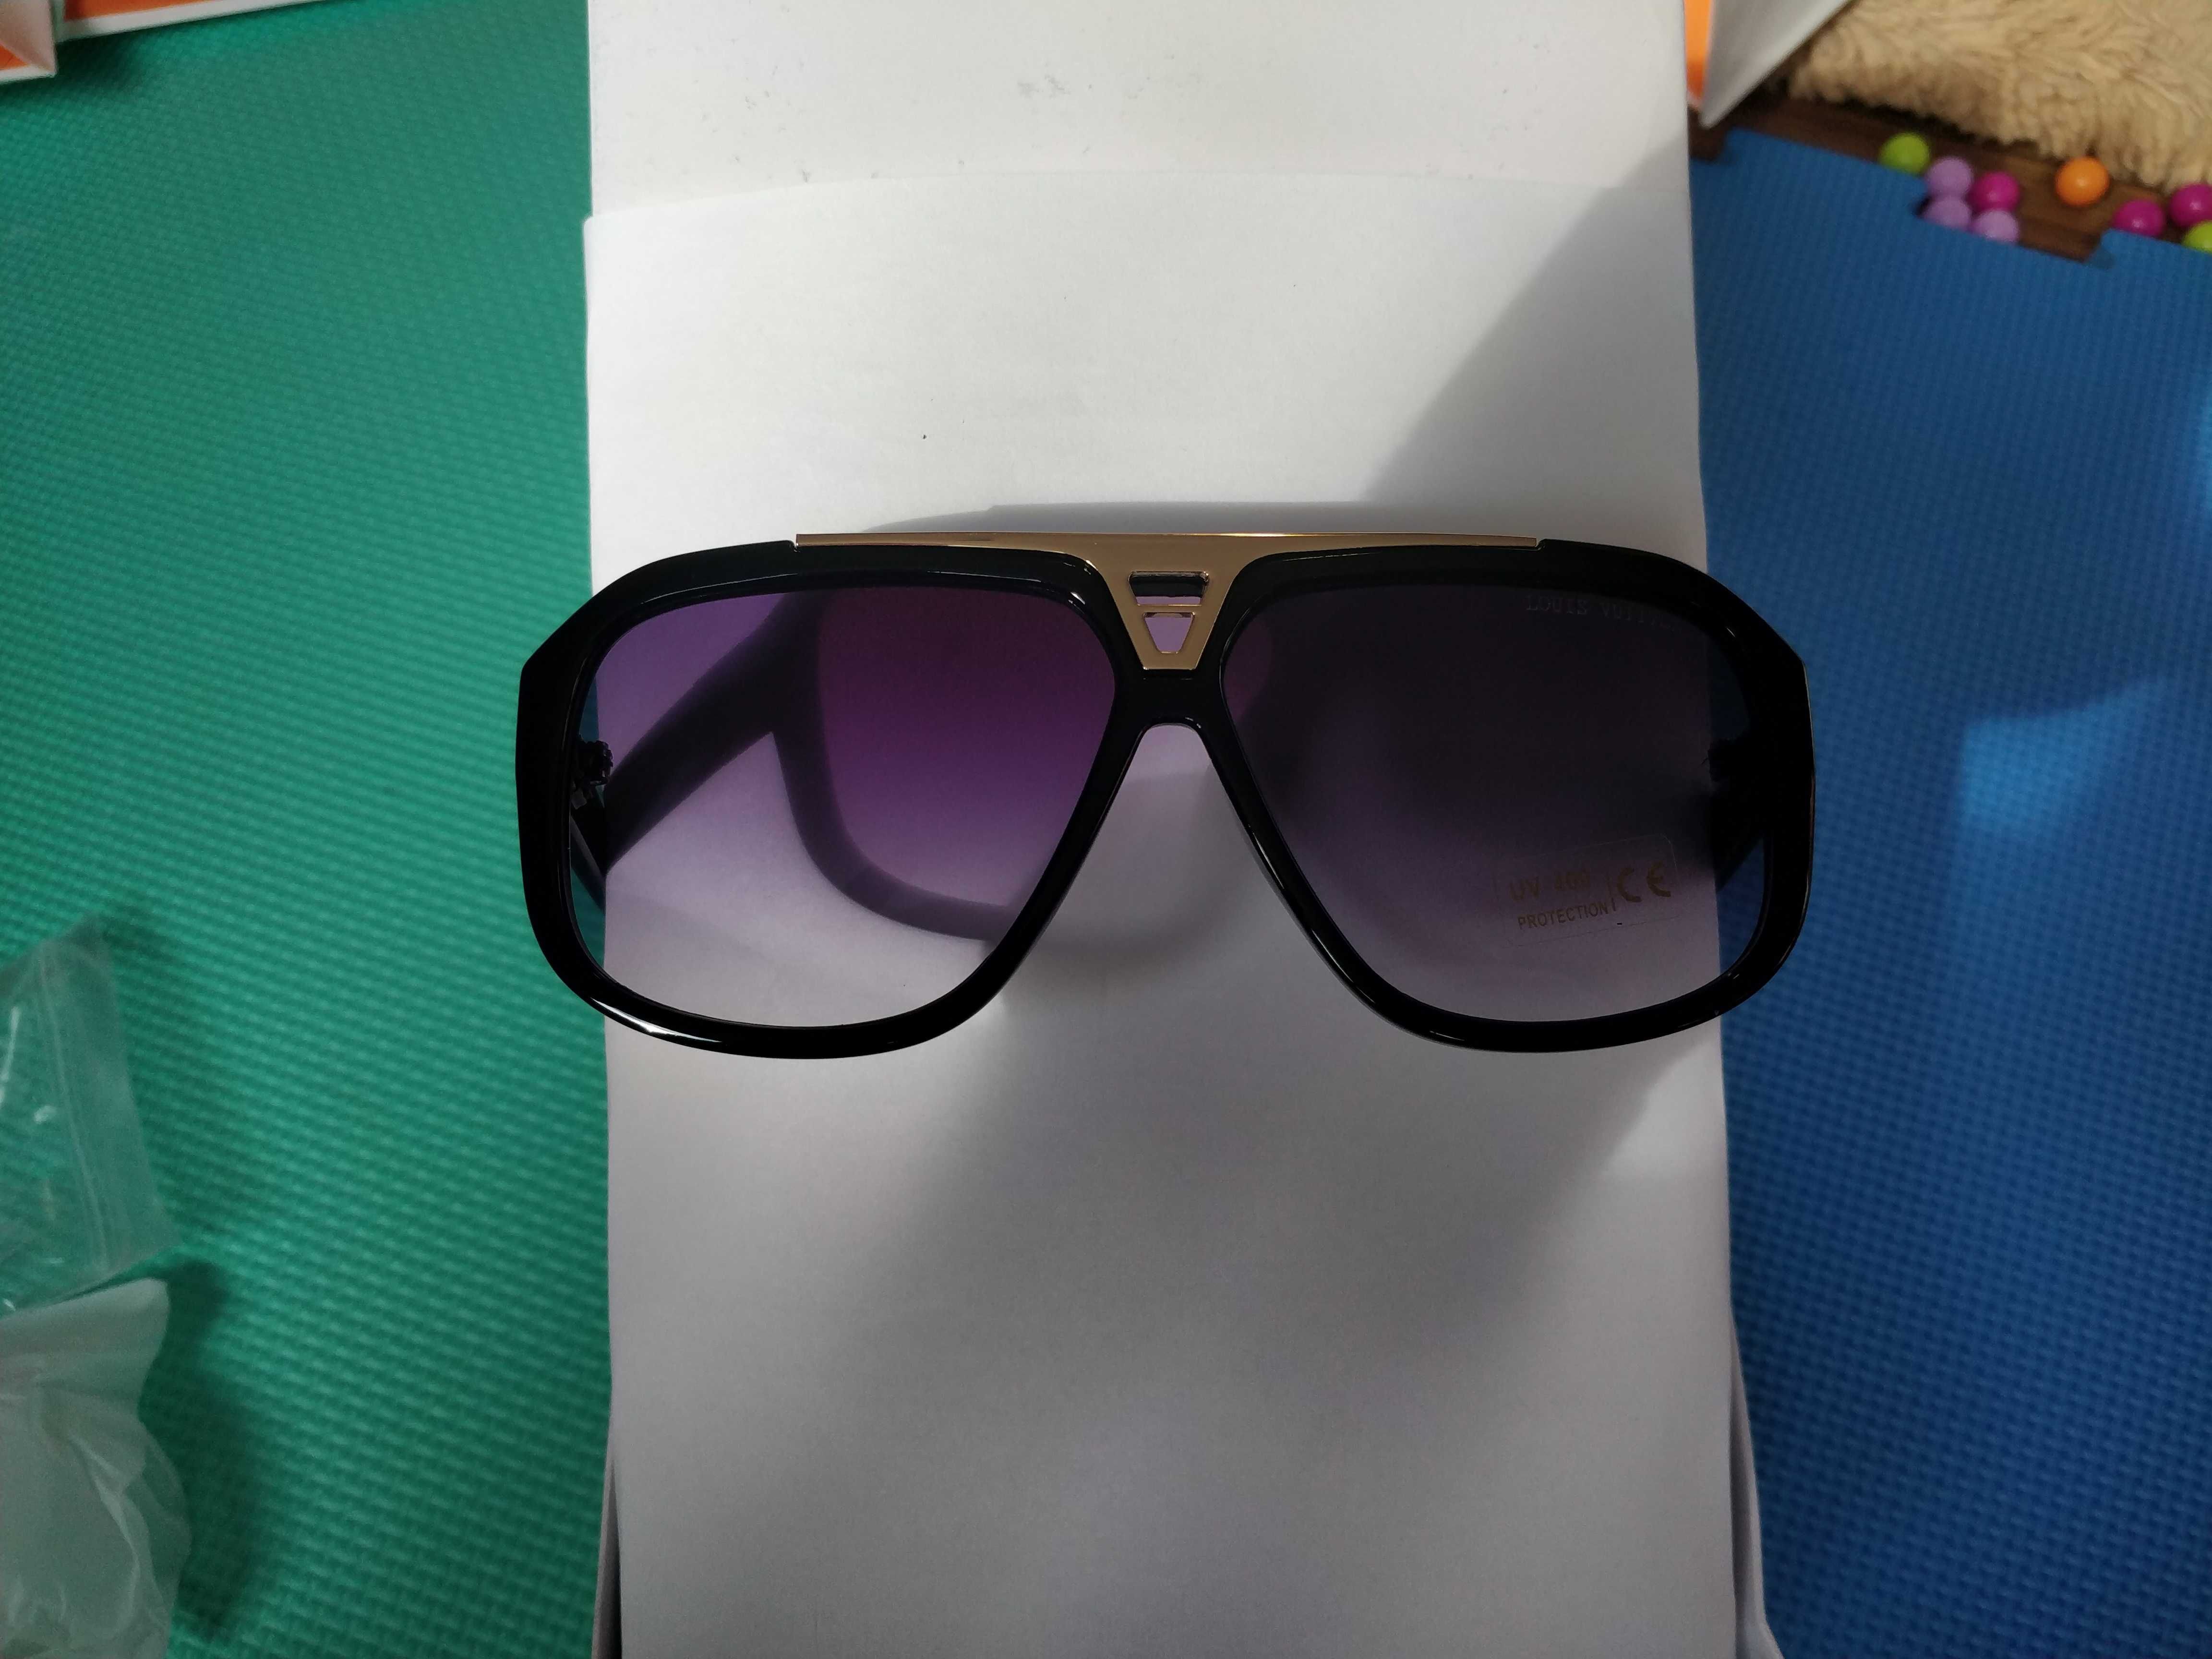 Ochelari Louis Vuiton, rame negre cu auriu, lentile mov degrade UV400